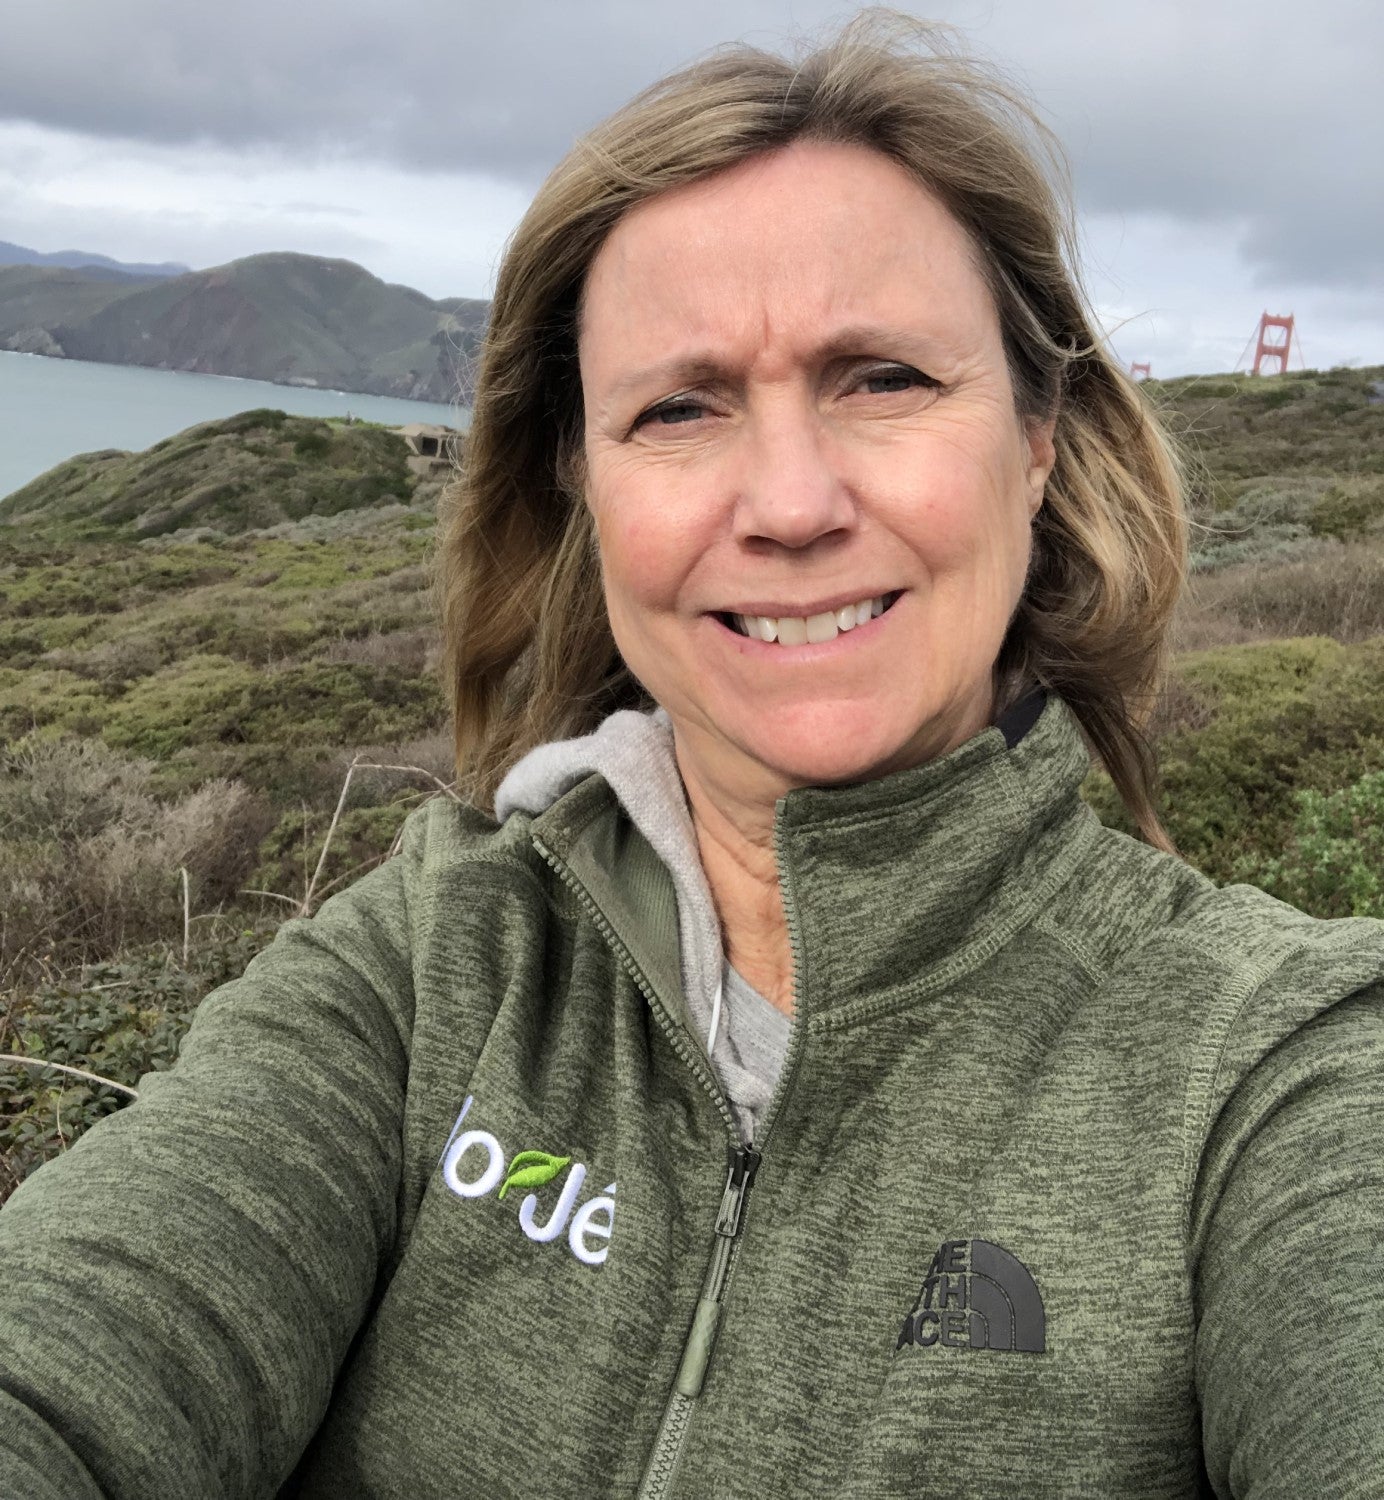 Linda selfie on a hike in the hills near San Francisco.